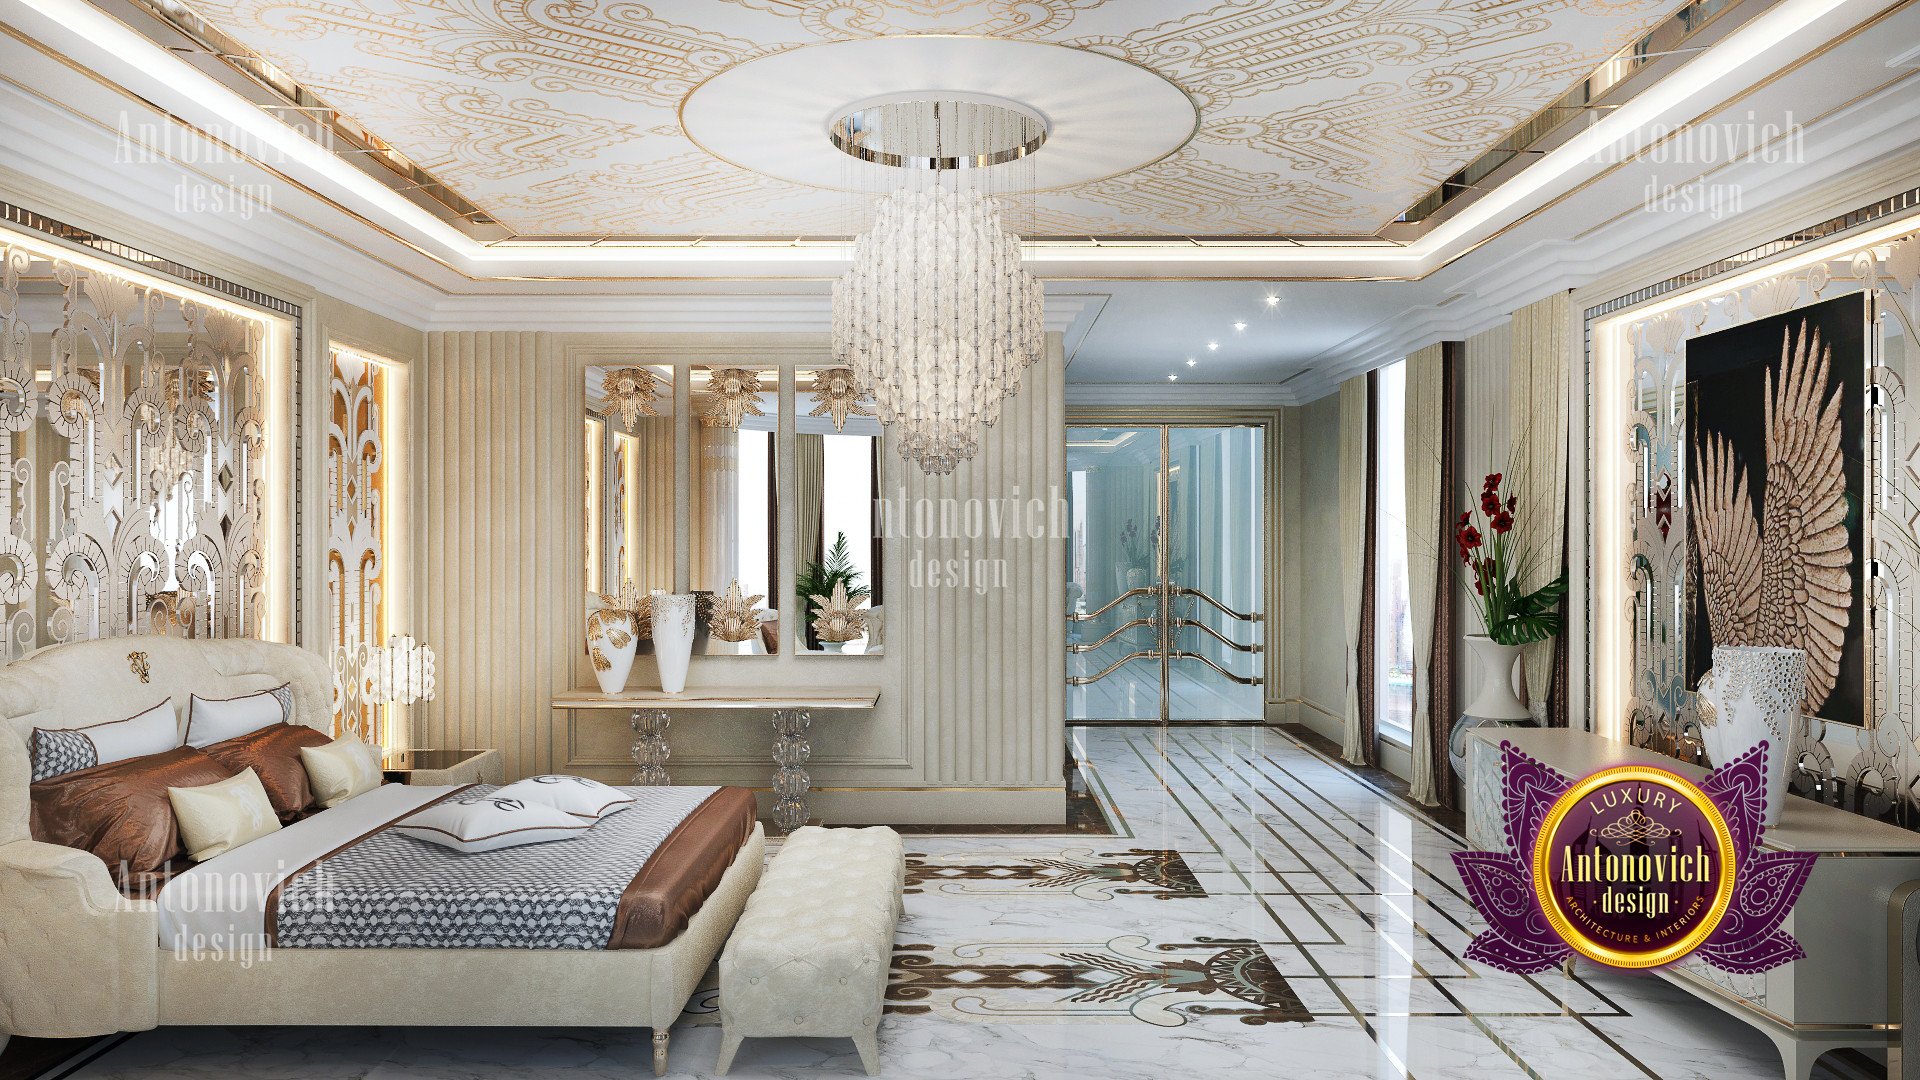 Modern Luxury bedroom decor luxury interior design